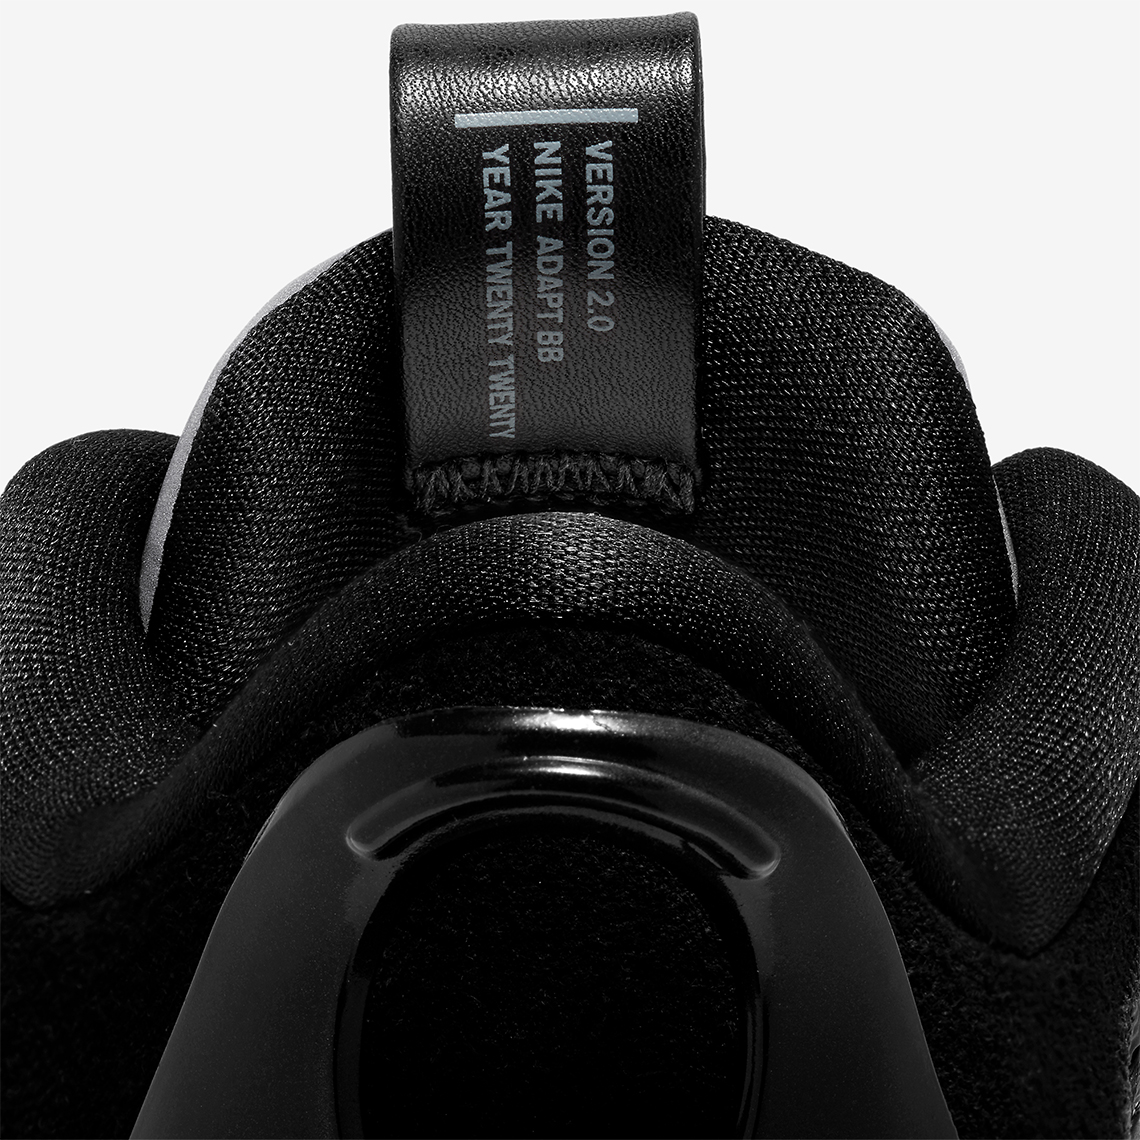 Nike Adapt Bb 2 Release Info Bq5397 001 9